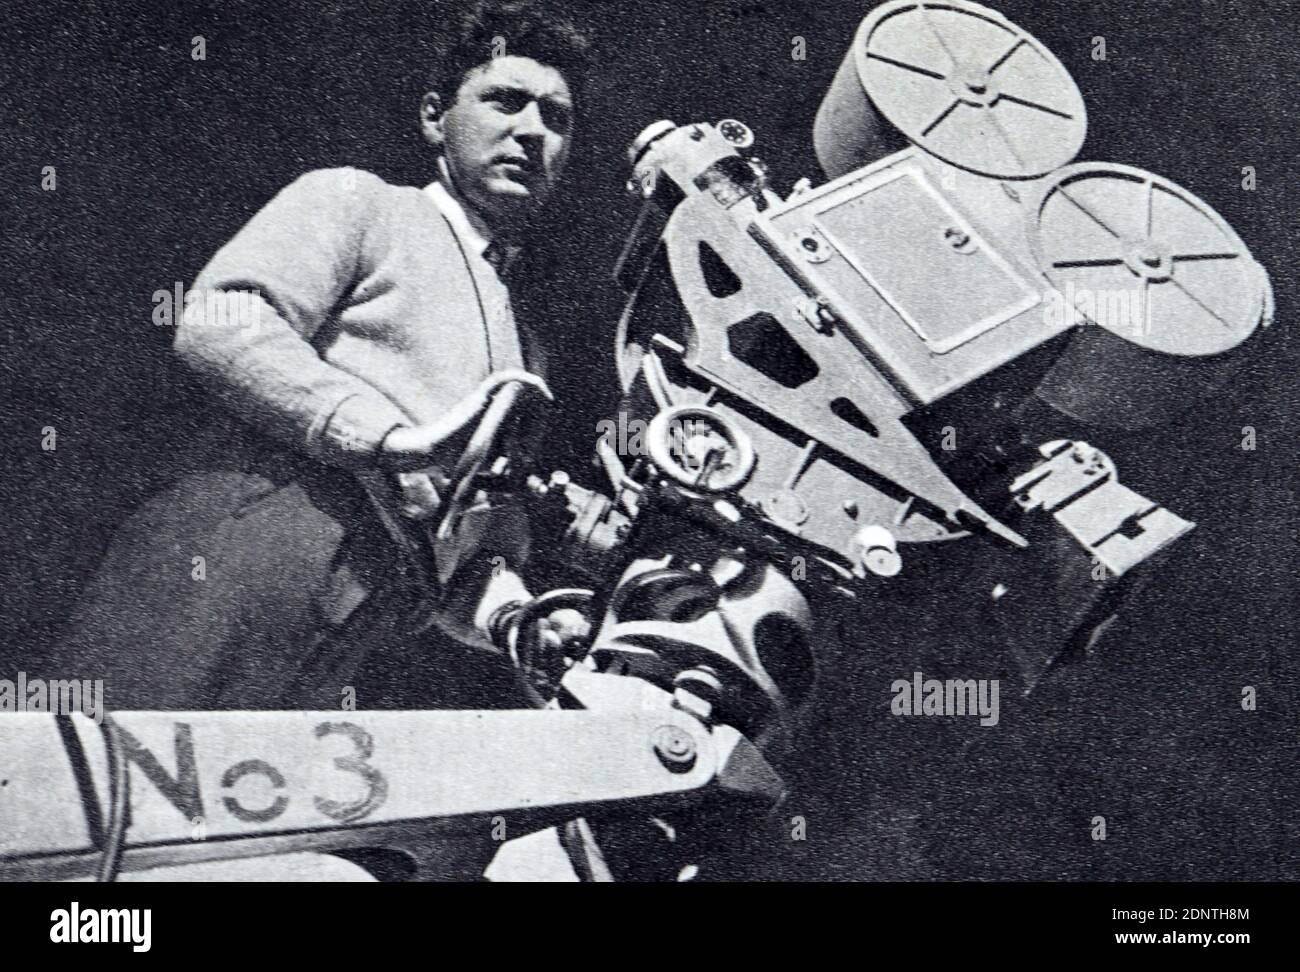 Photograph of Ernest Steward (1910-1990) a British cinematographer. Stock Photo